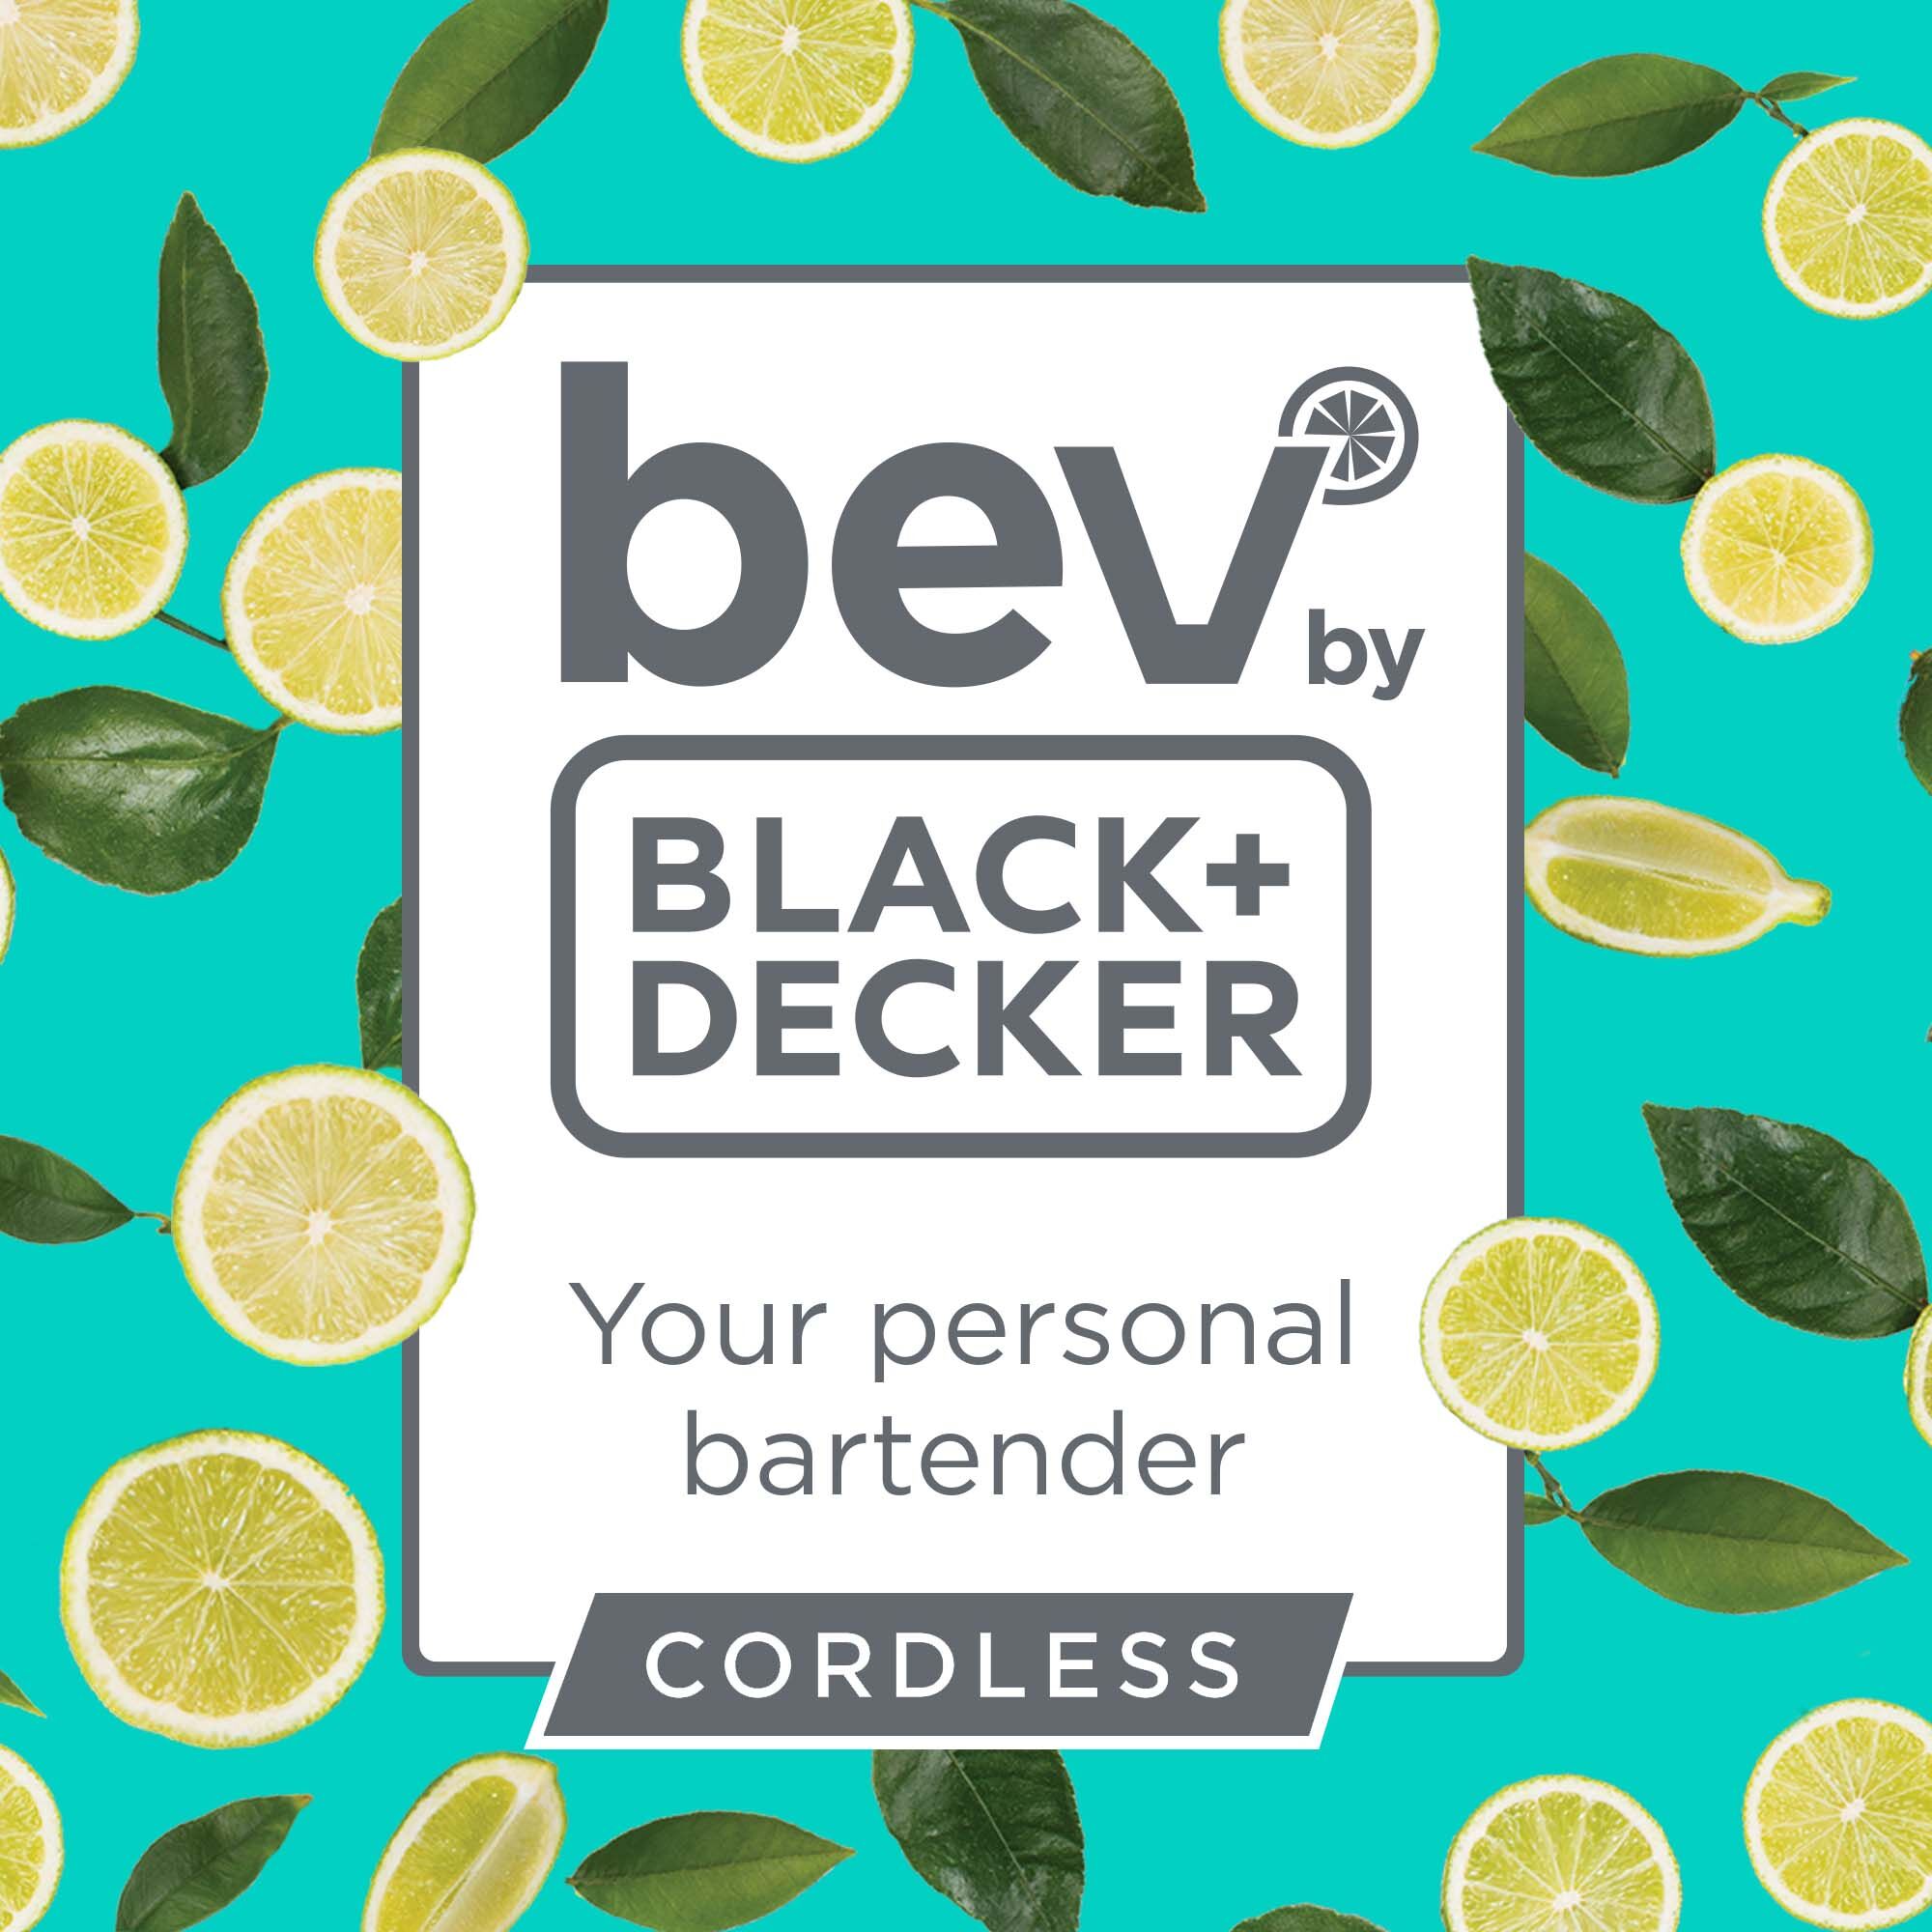 bev by BLACK+DECKER cordless cocktail maker logo on a teal background with lemon print